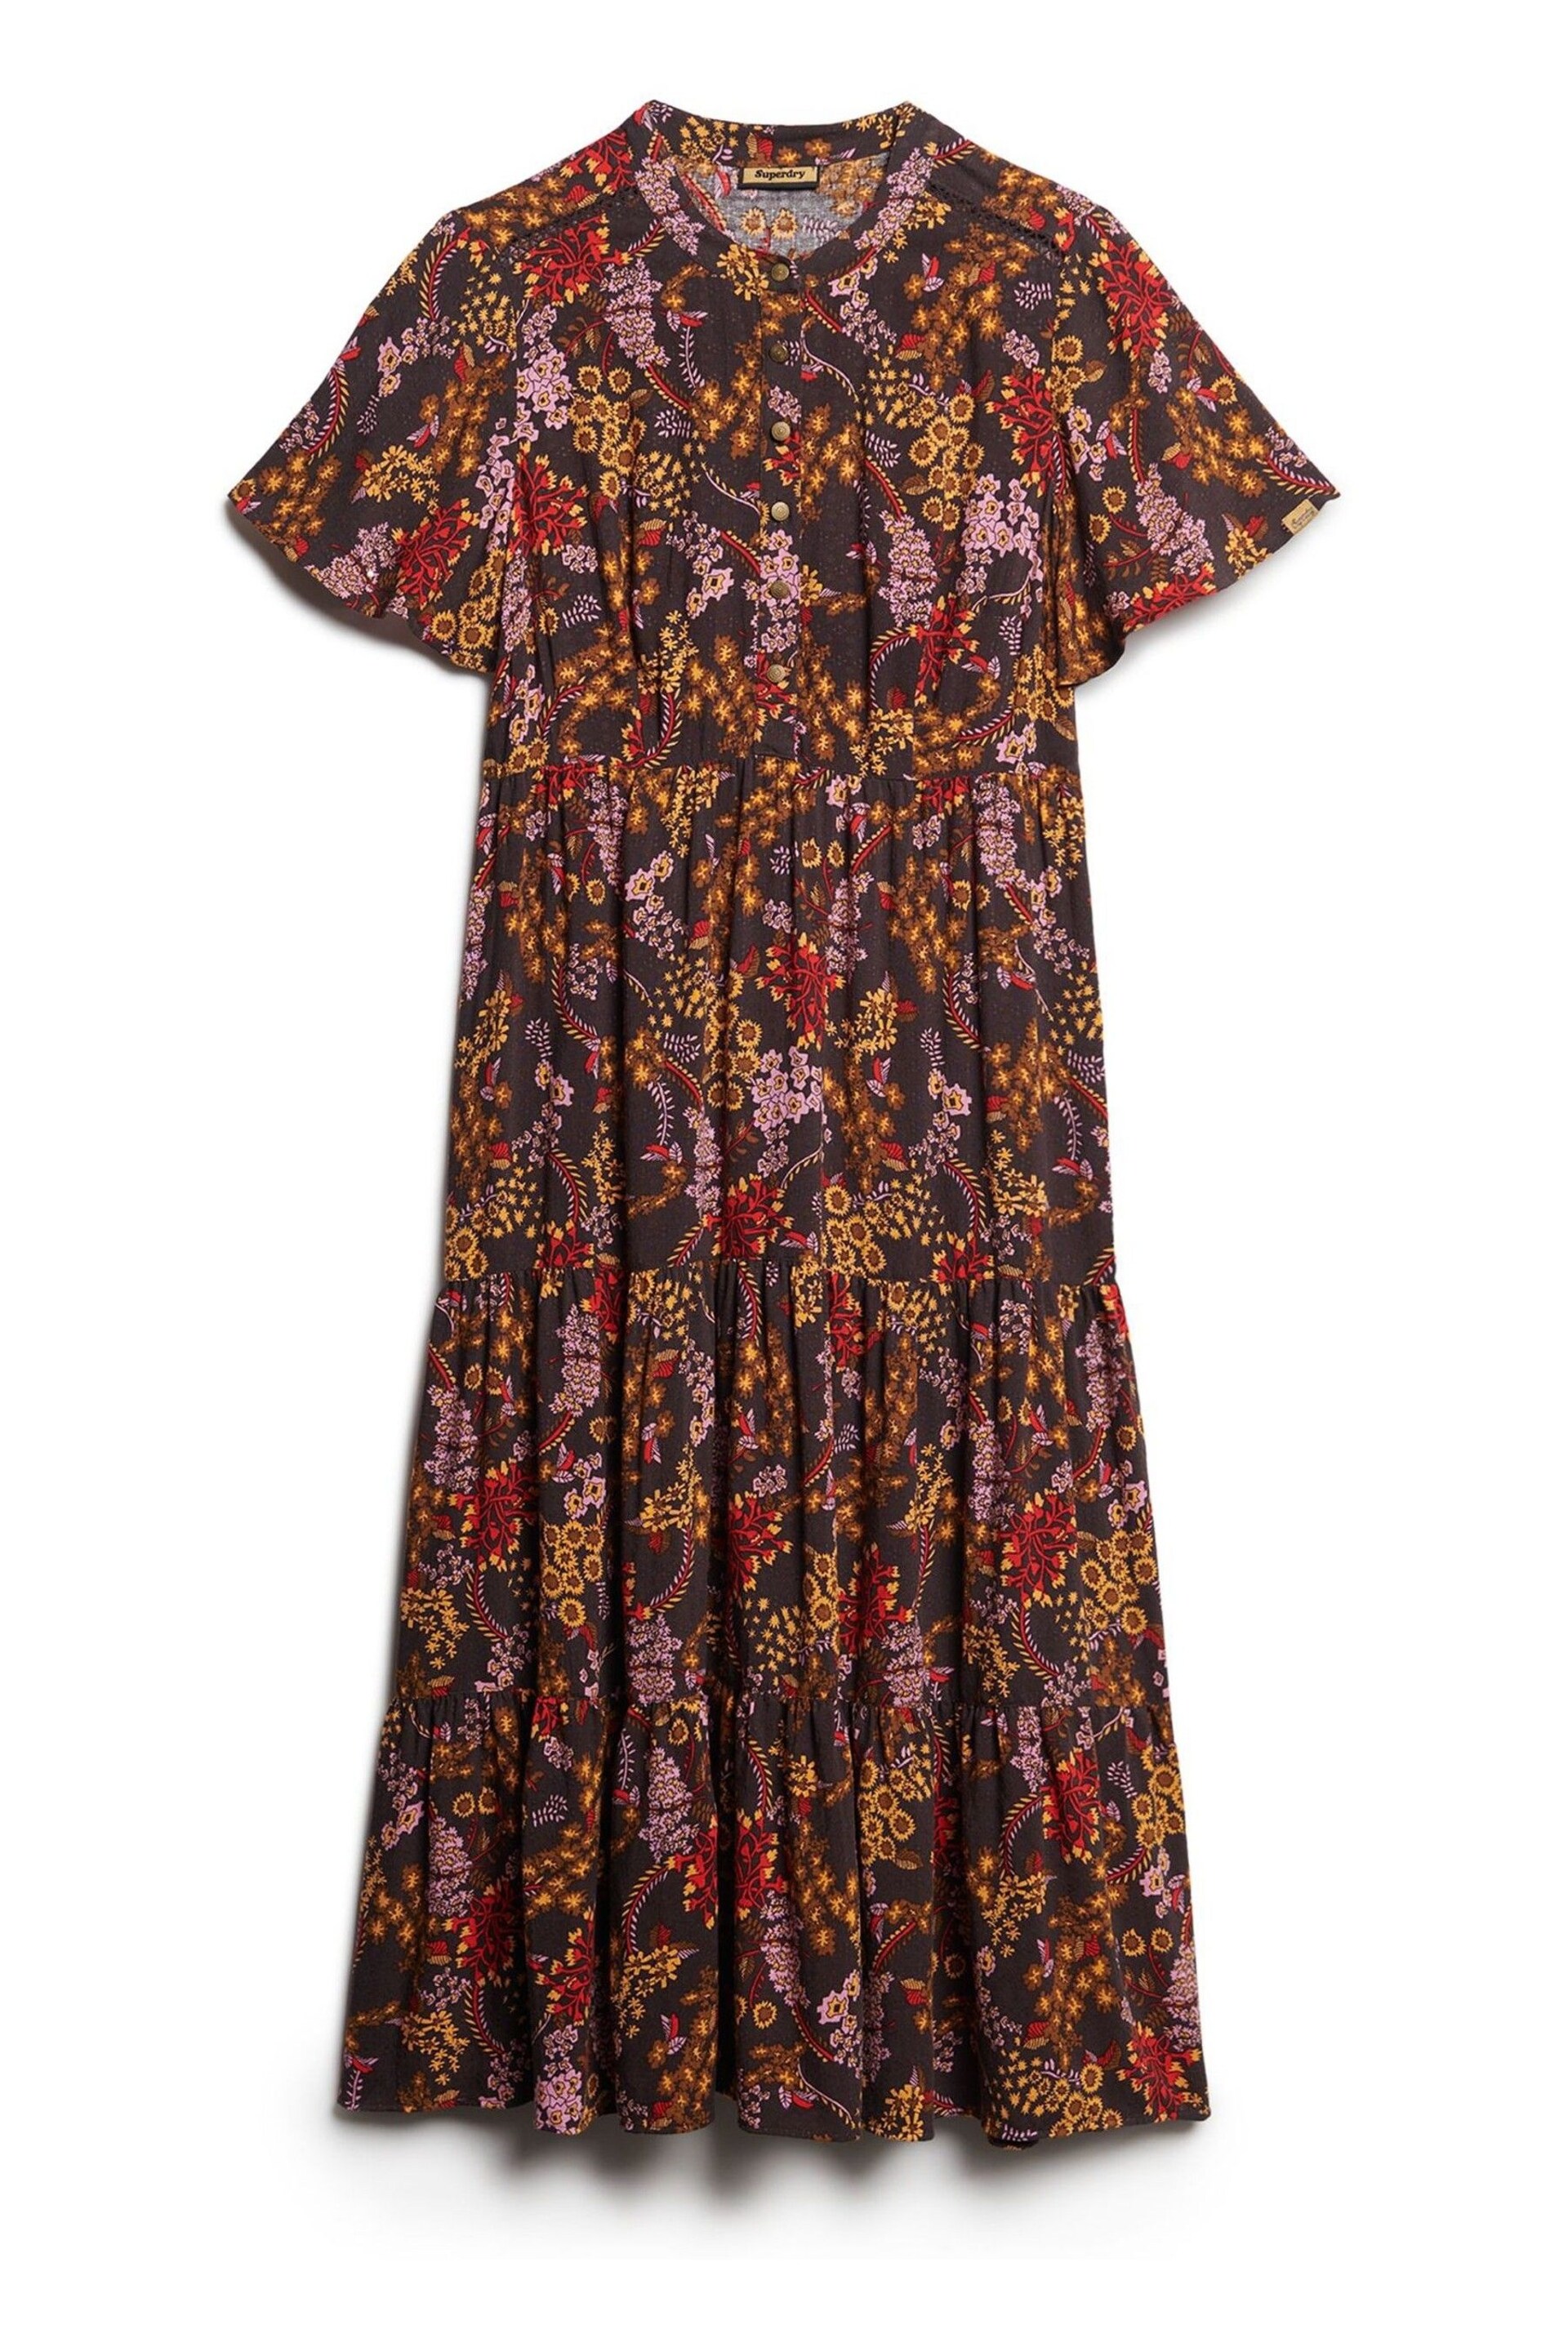 Superdry Brown Printed Tiered Midi Dress - Image 4 of 6